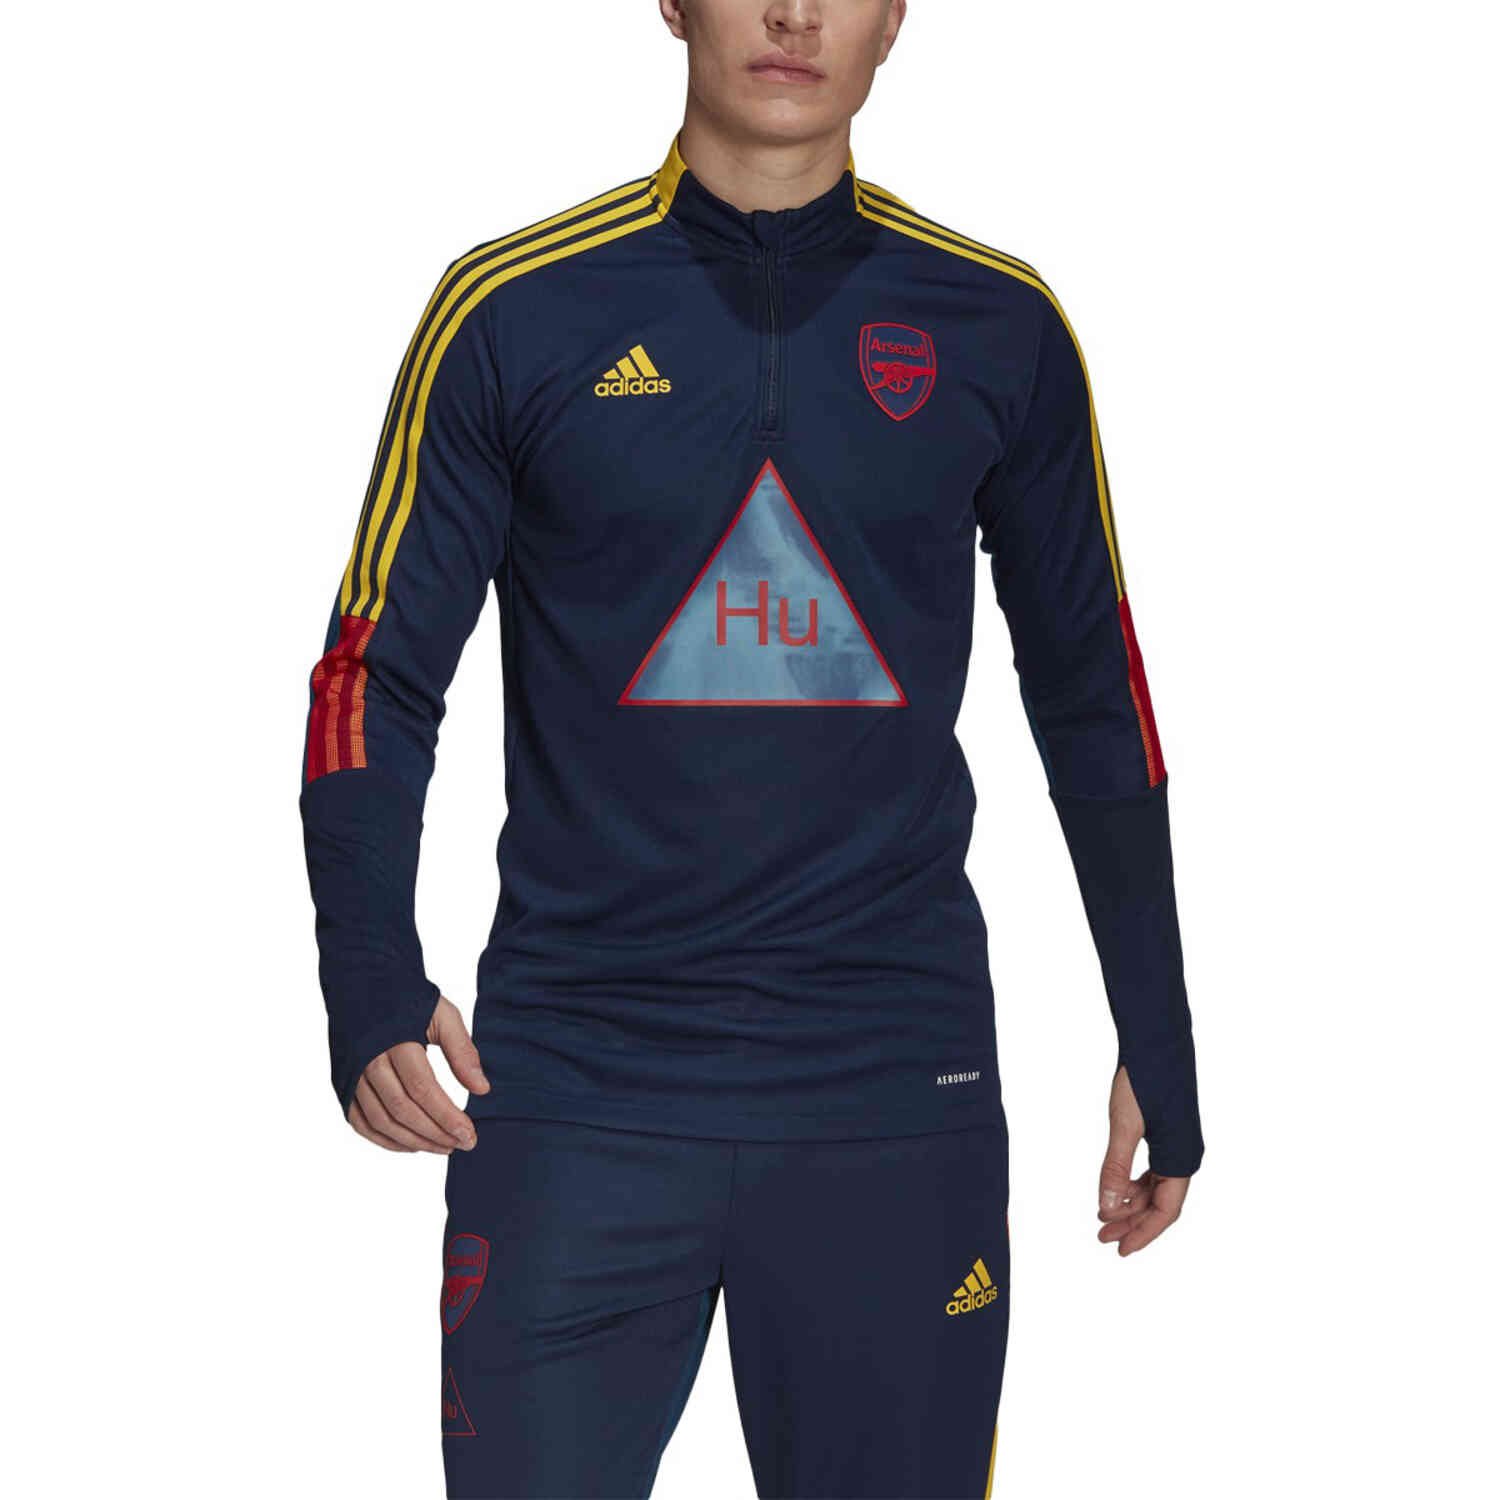 Big Rig prefers Fanatics jersey over Adidas one ;) : r